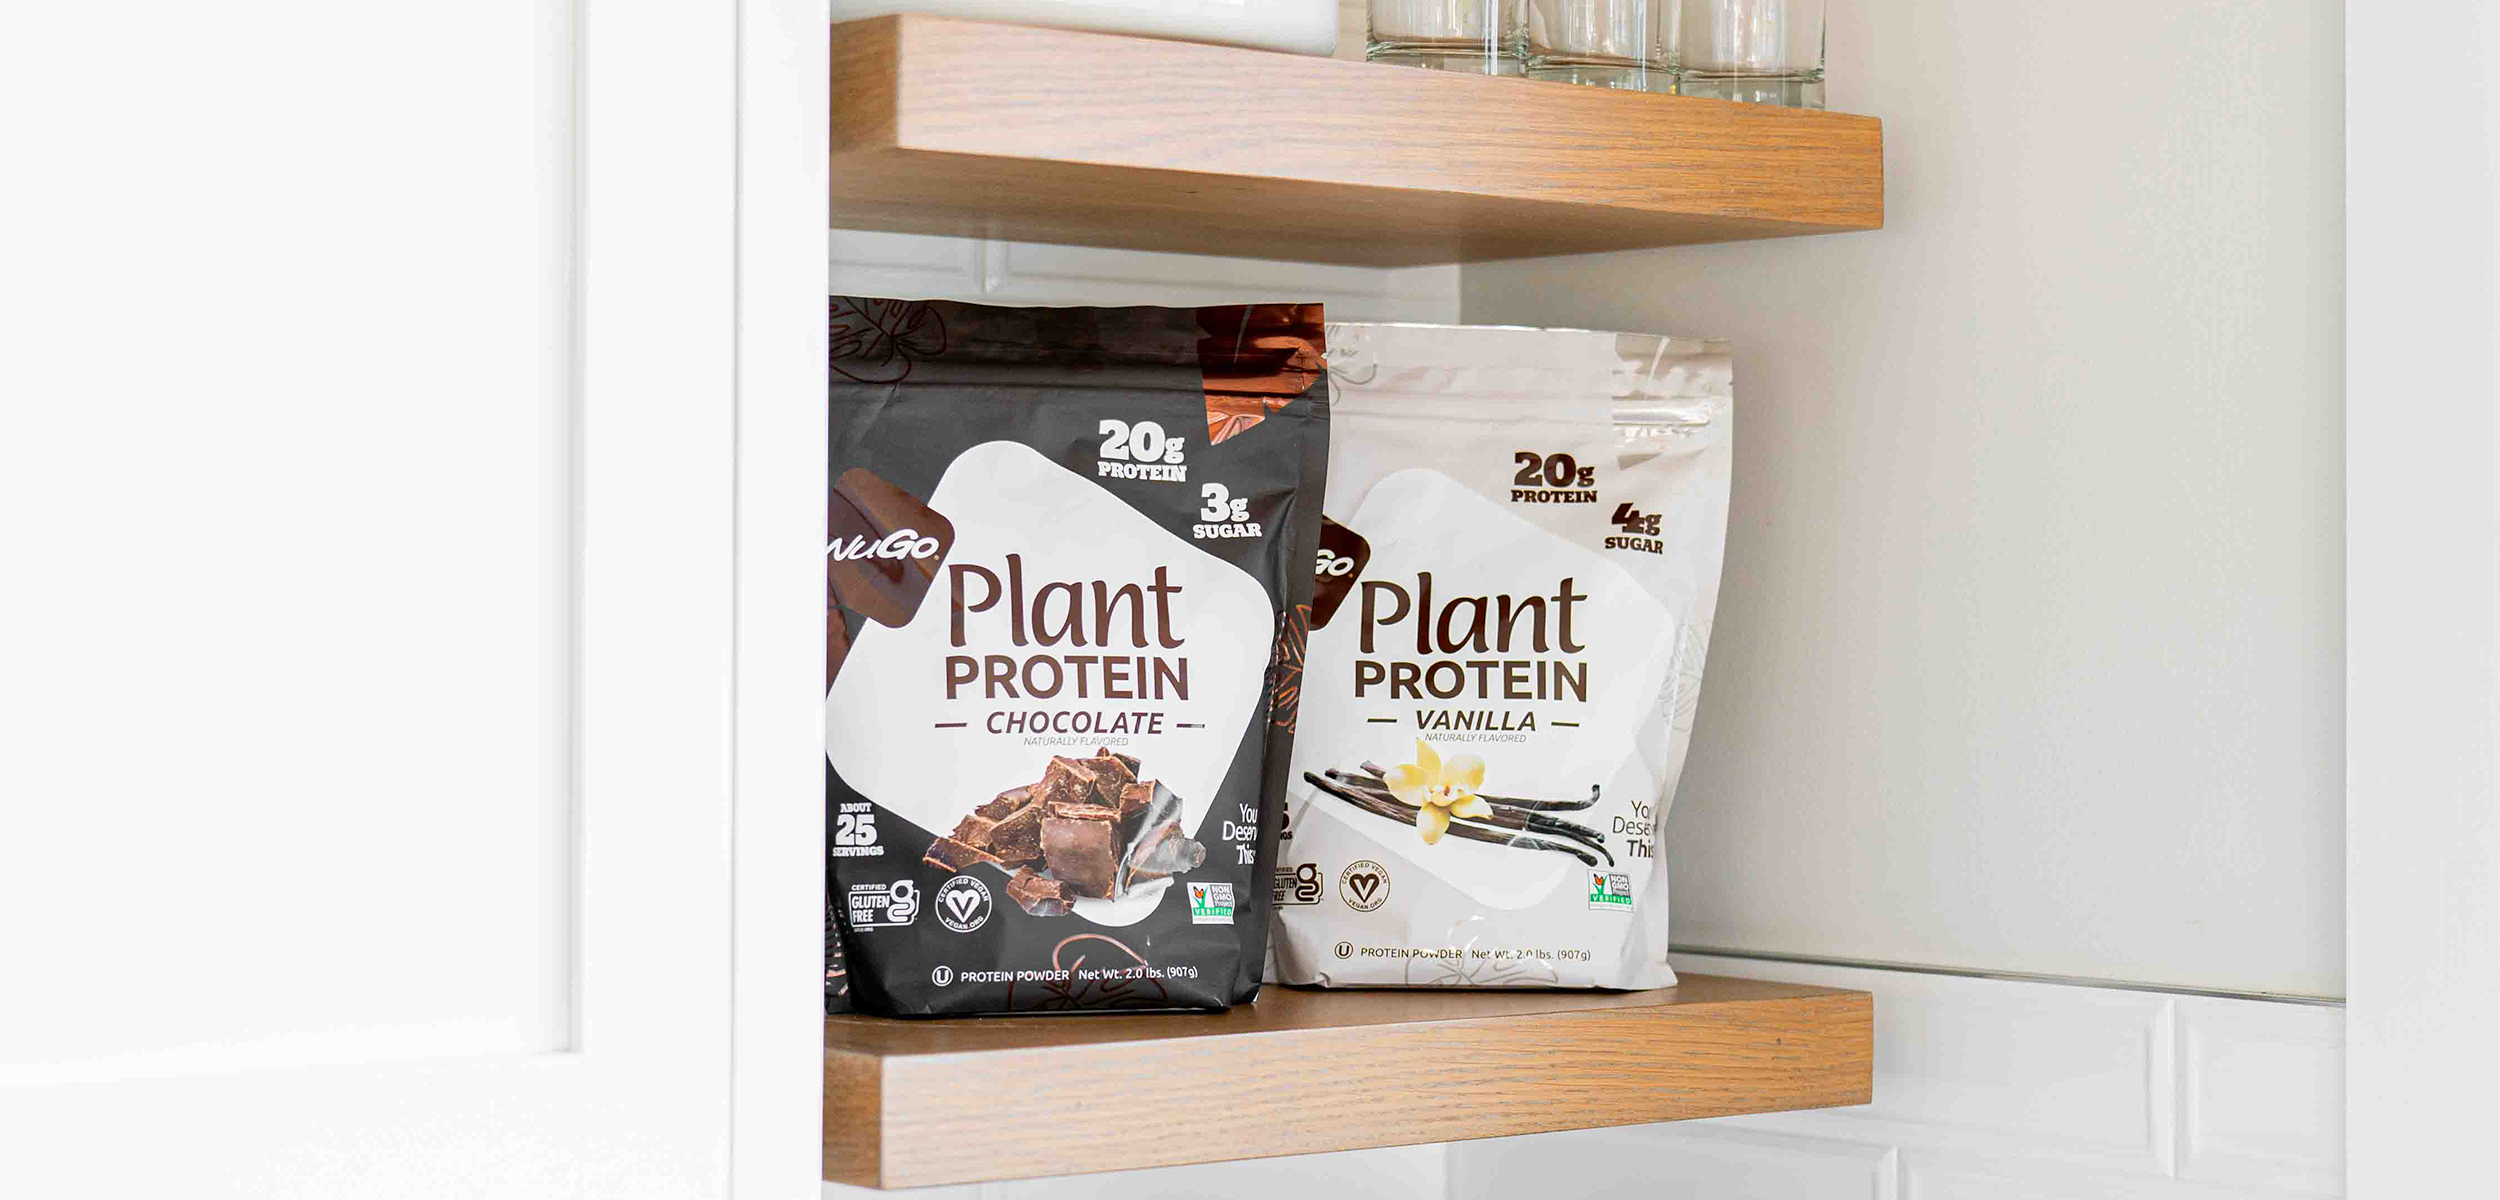 Chocolate and Vanilla Protein Powder on Shelf